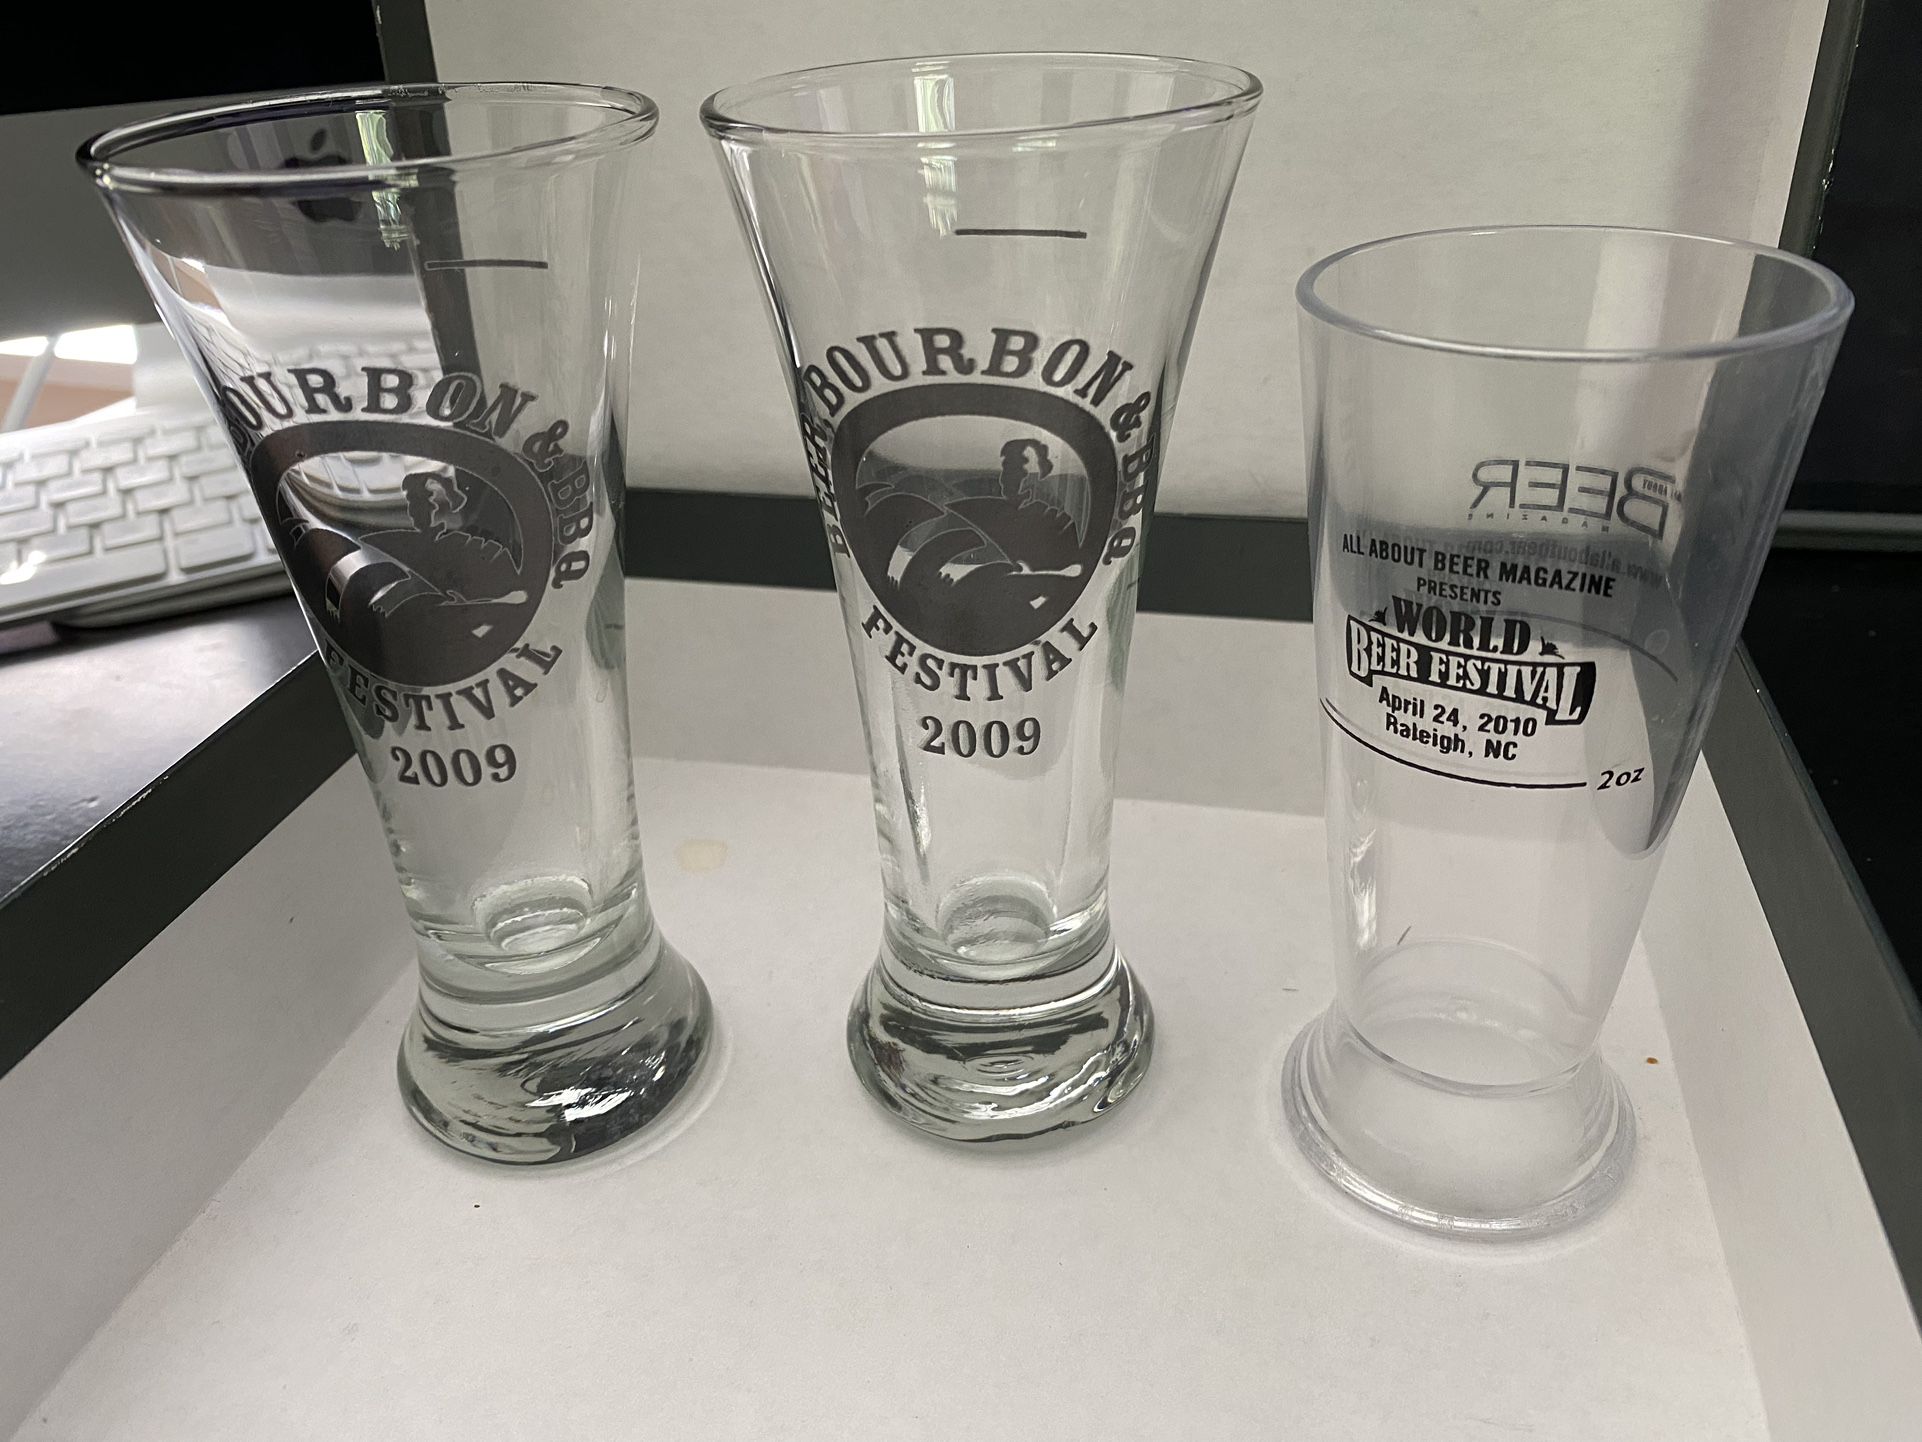 2009 Beer Bourbon & BBQ Festival souvenir tasting glasses - set of 2 + 1 WBF bonus glass